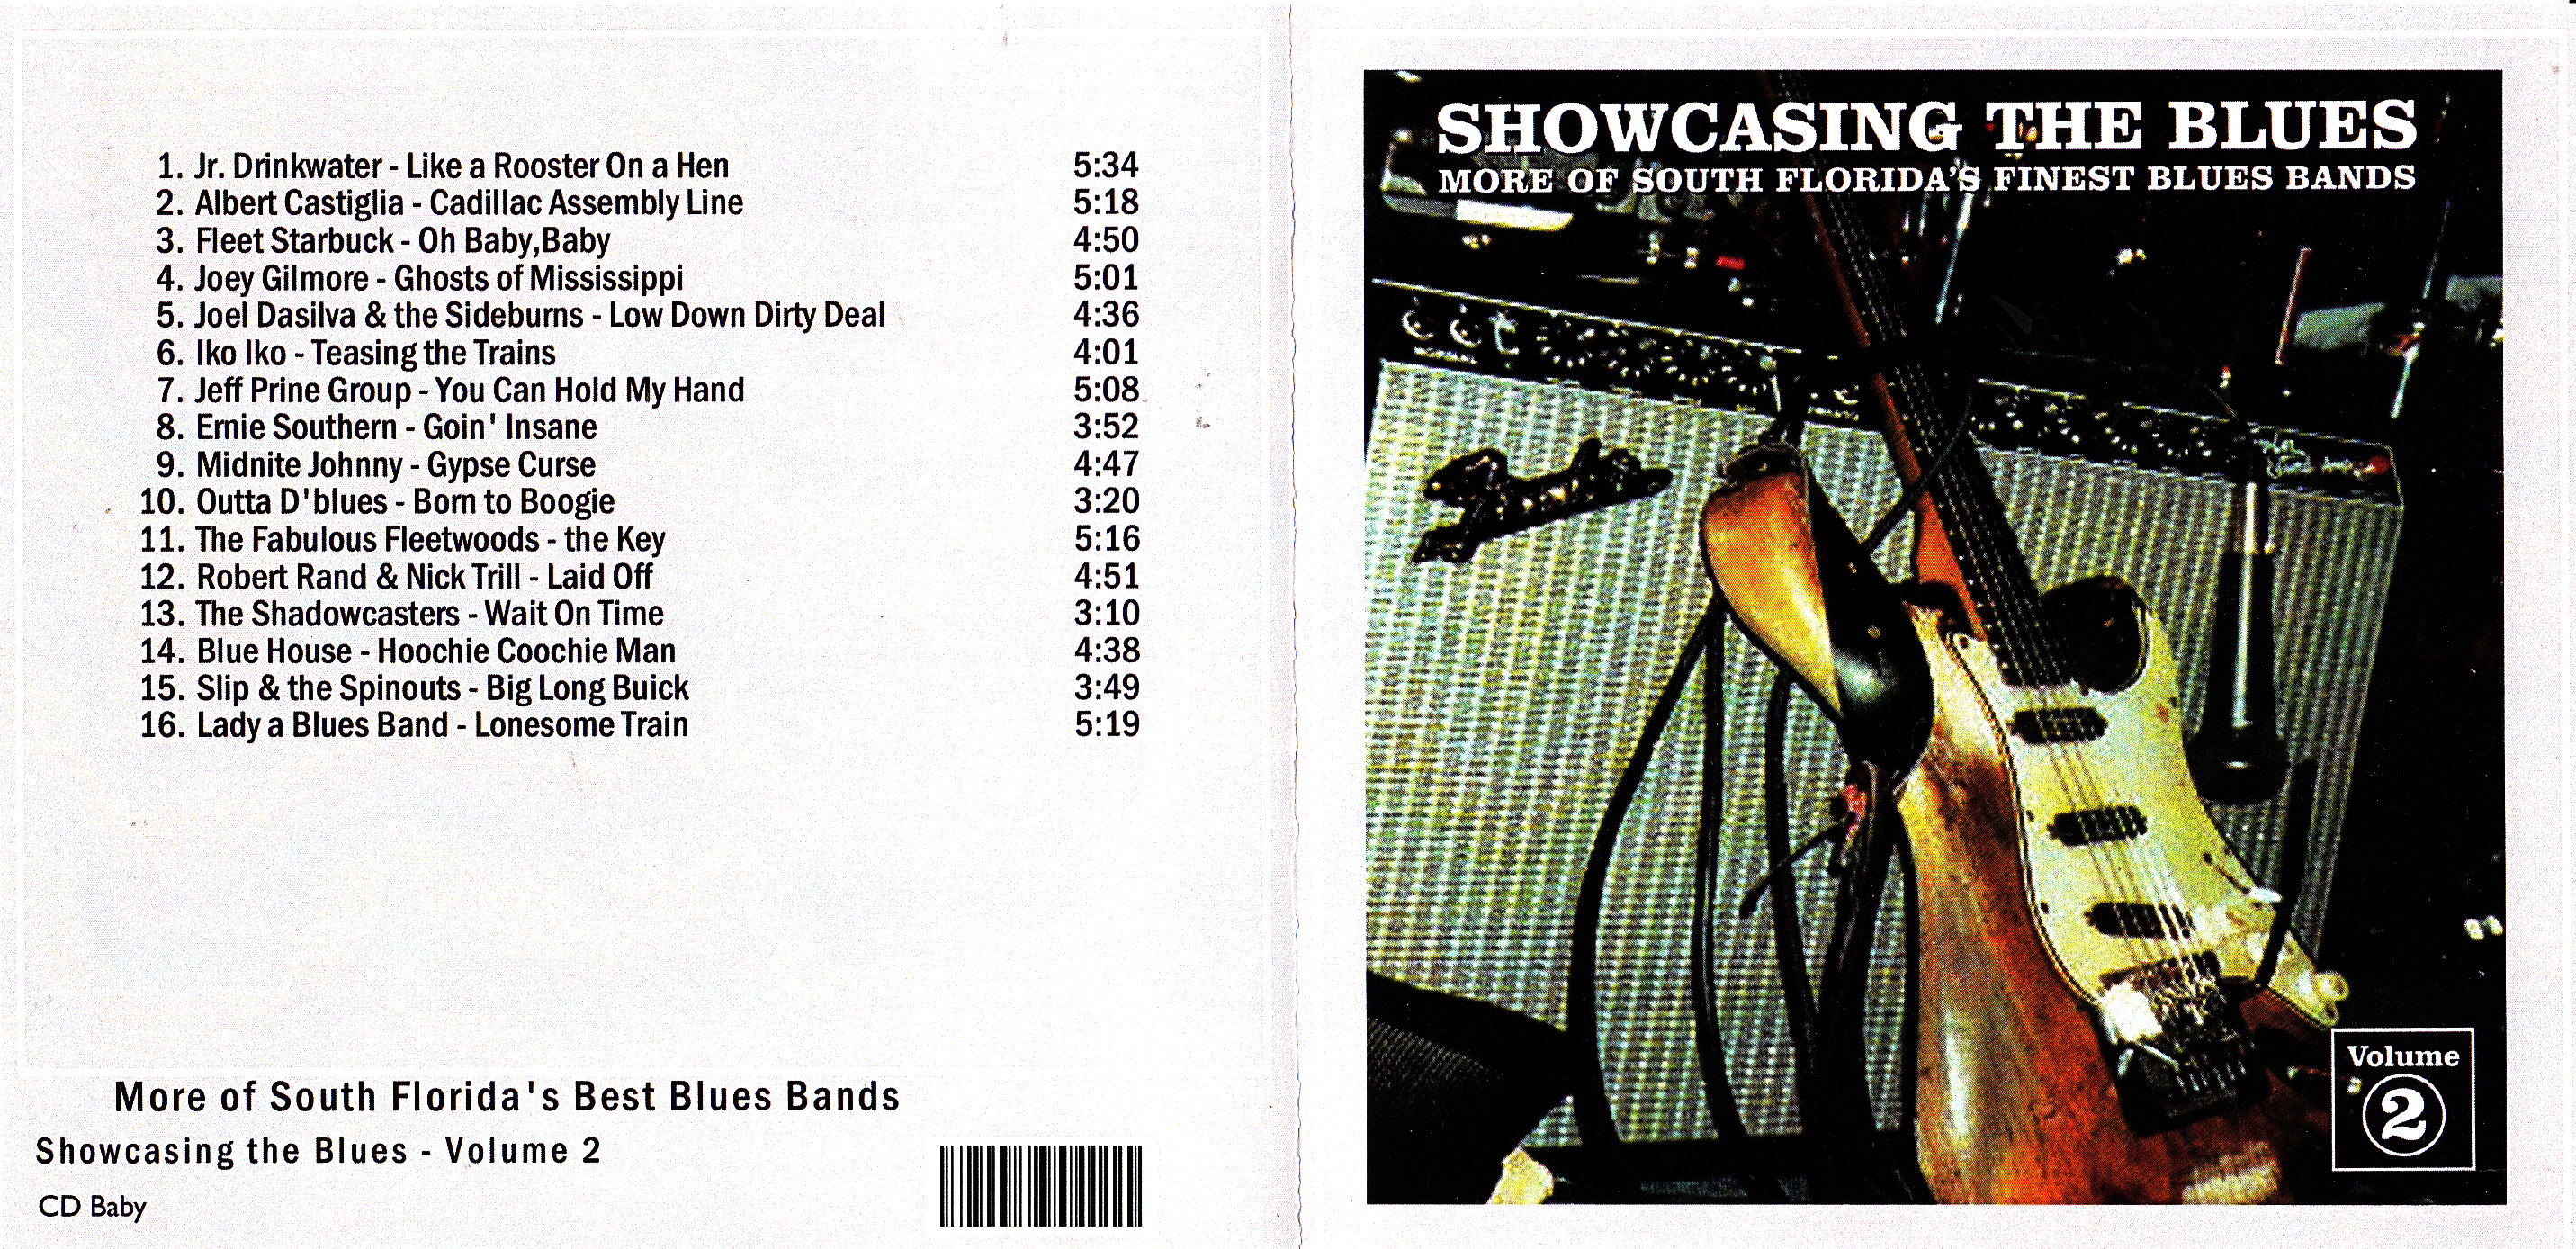 Showcasing The Blues - Volume 2